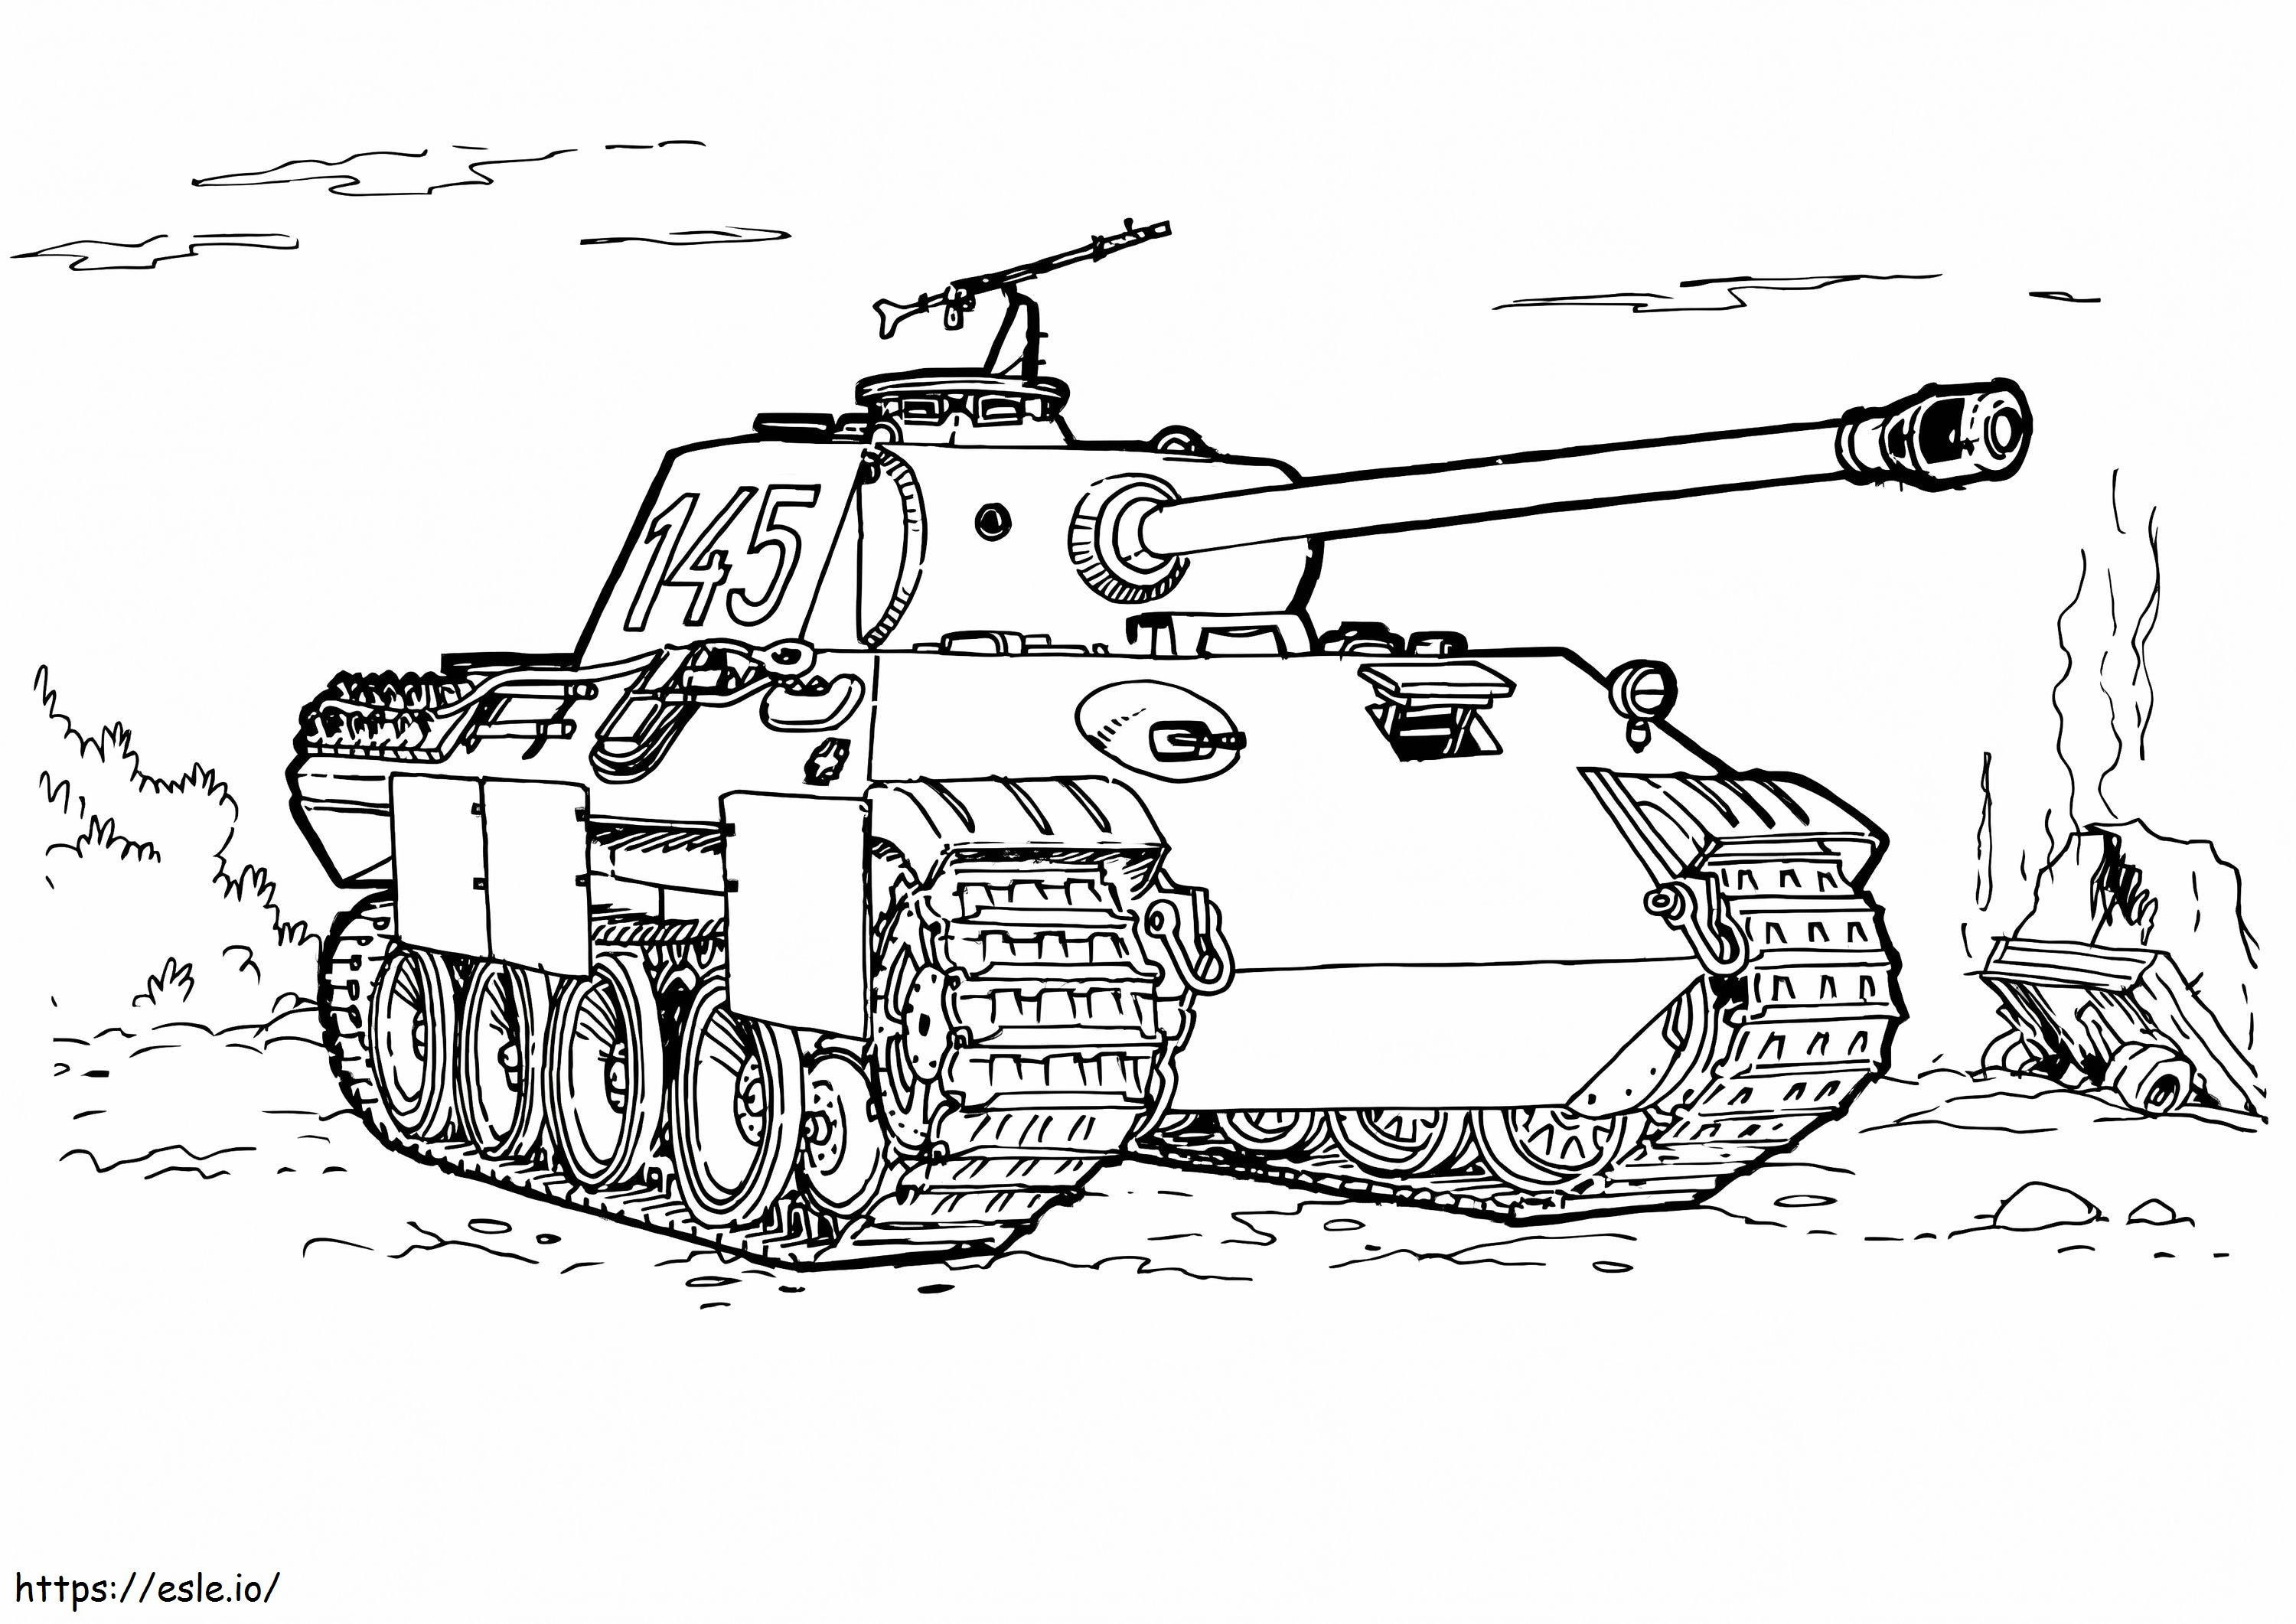 Panther-Panzer ausmalbilder